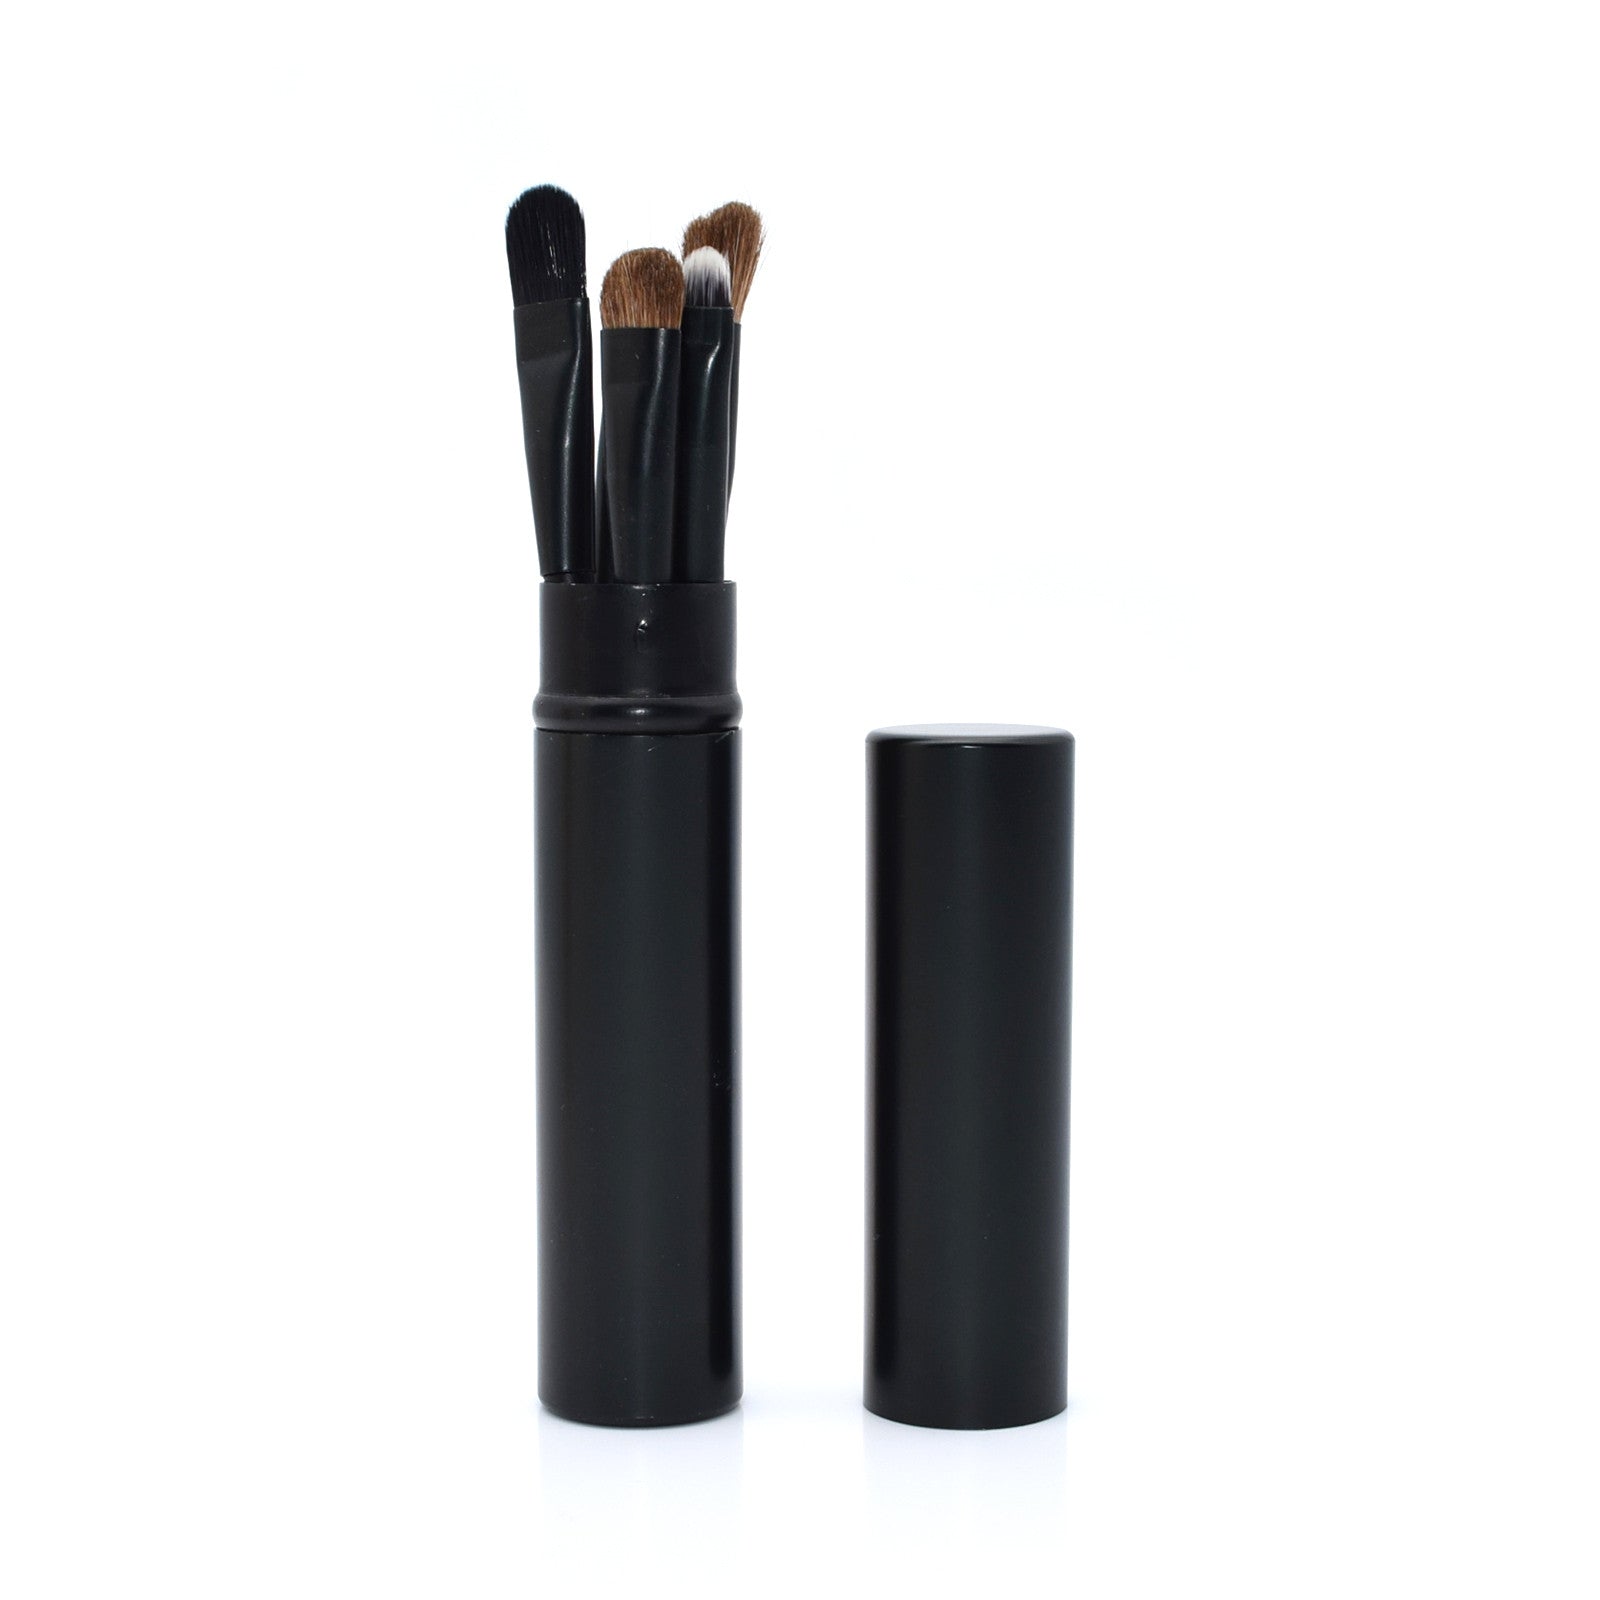 Eye Makeup Brushes Set (5 Pieces) - Dolovemk Beauty